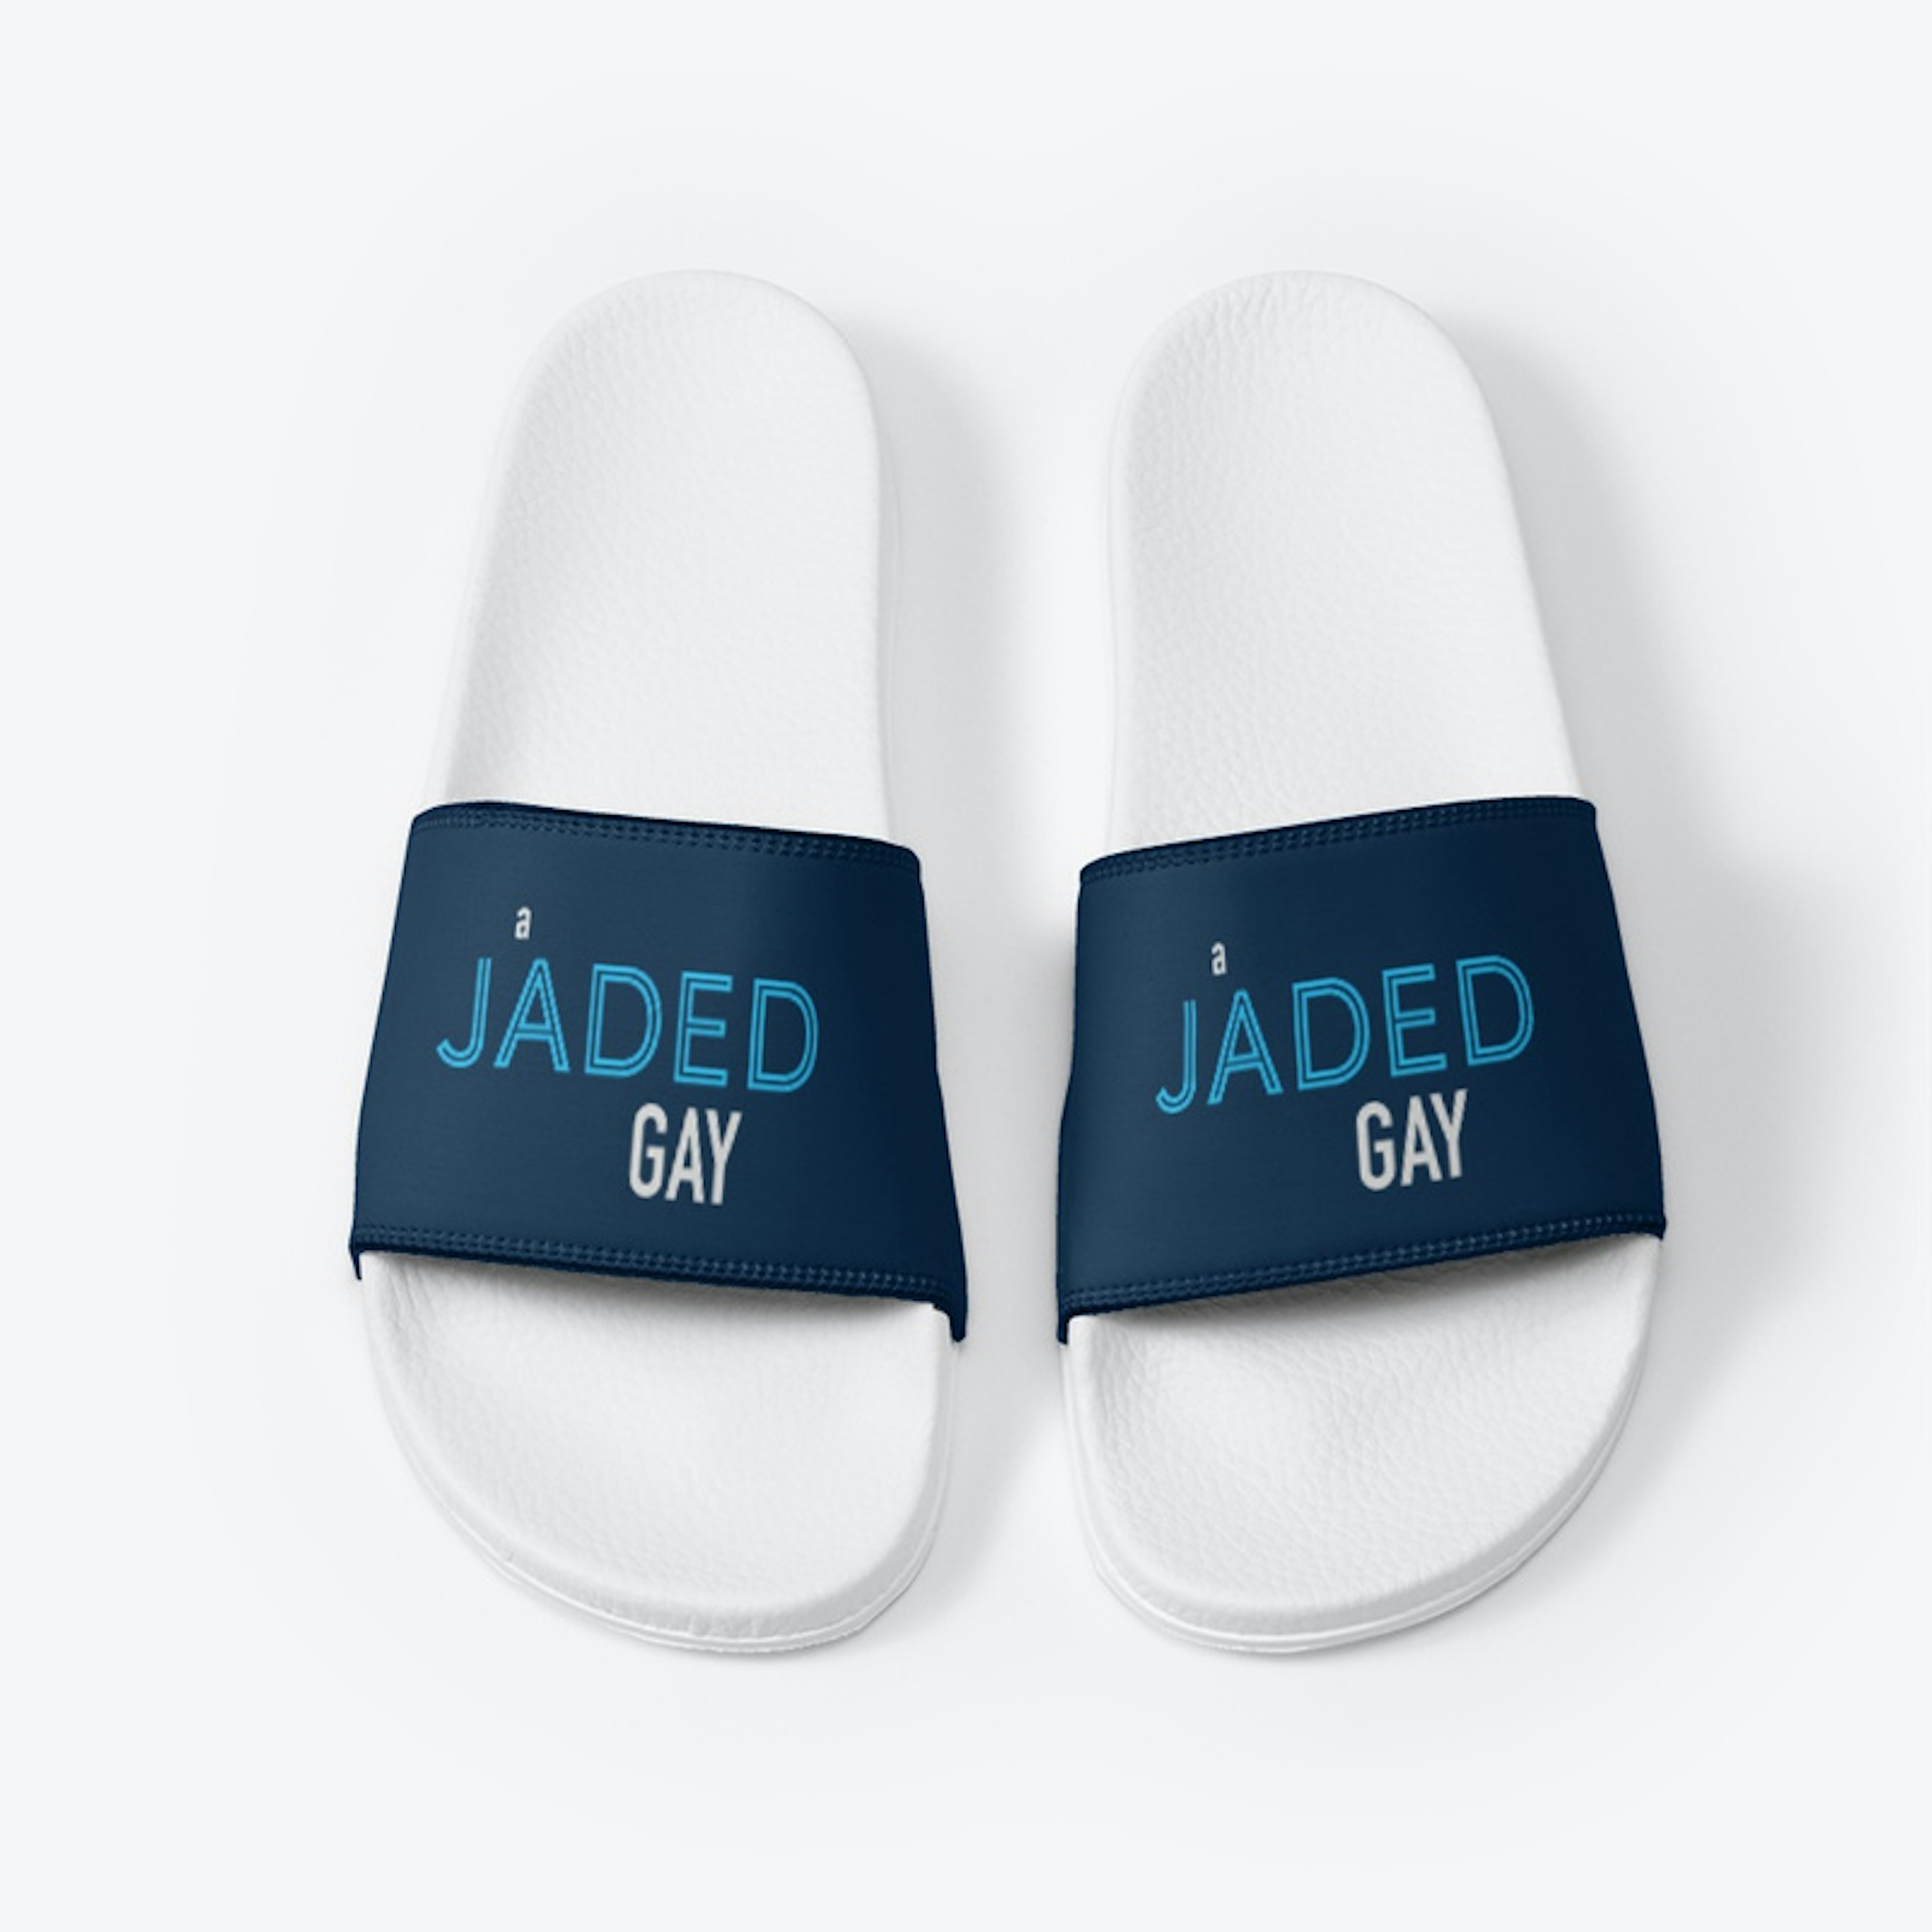 A Jaded Gay Goodies